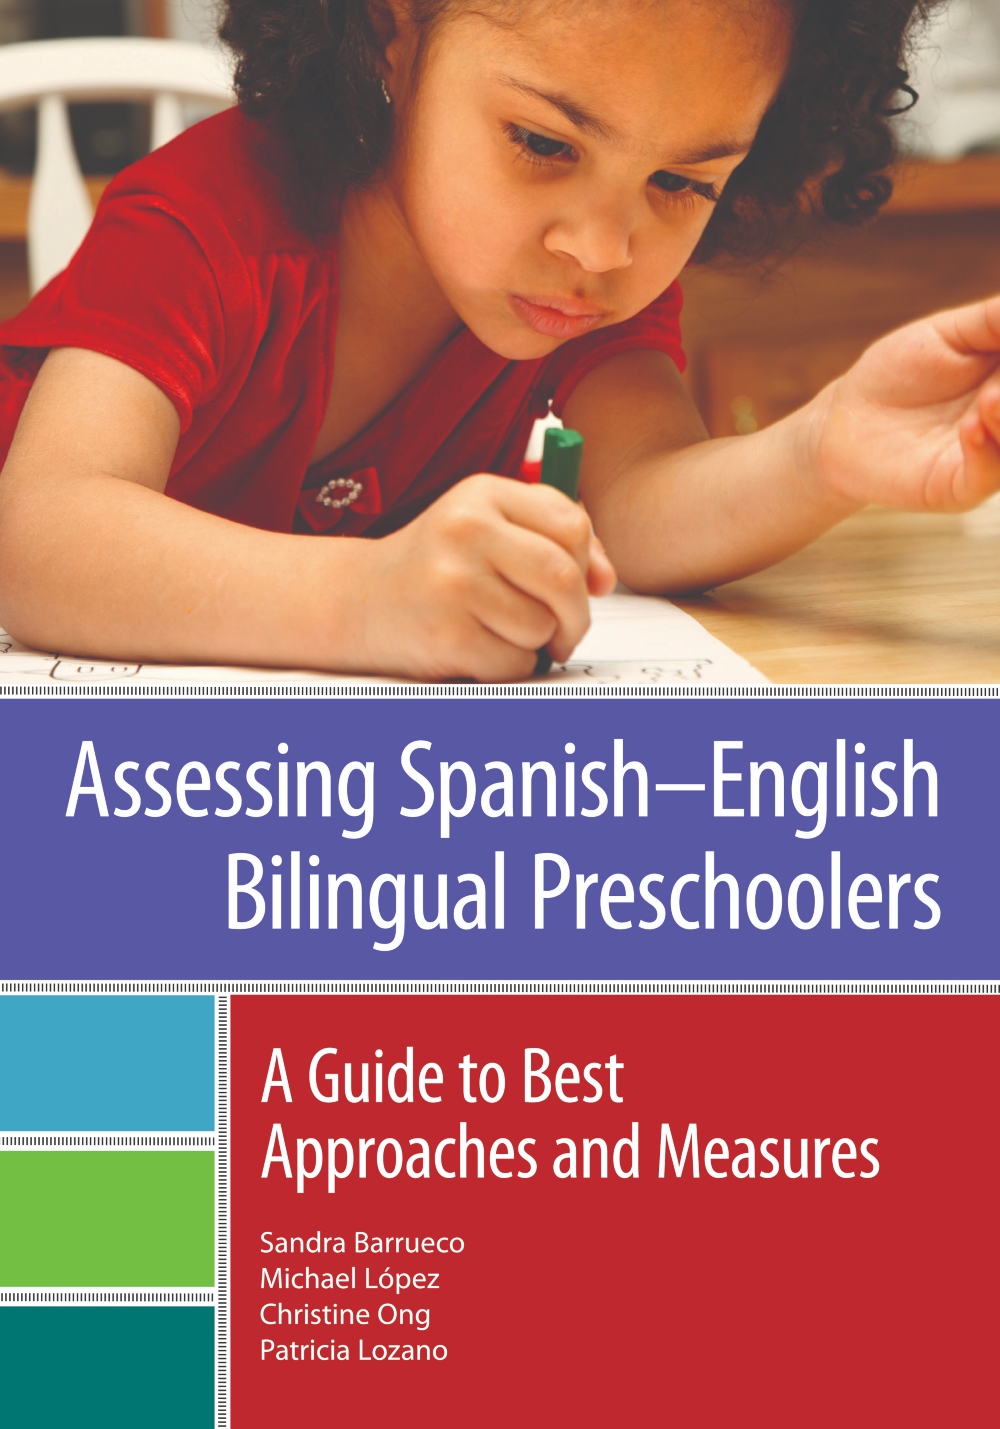 Assessing Spanish-English Bilingual Preschoolers